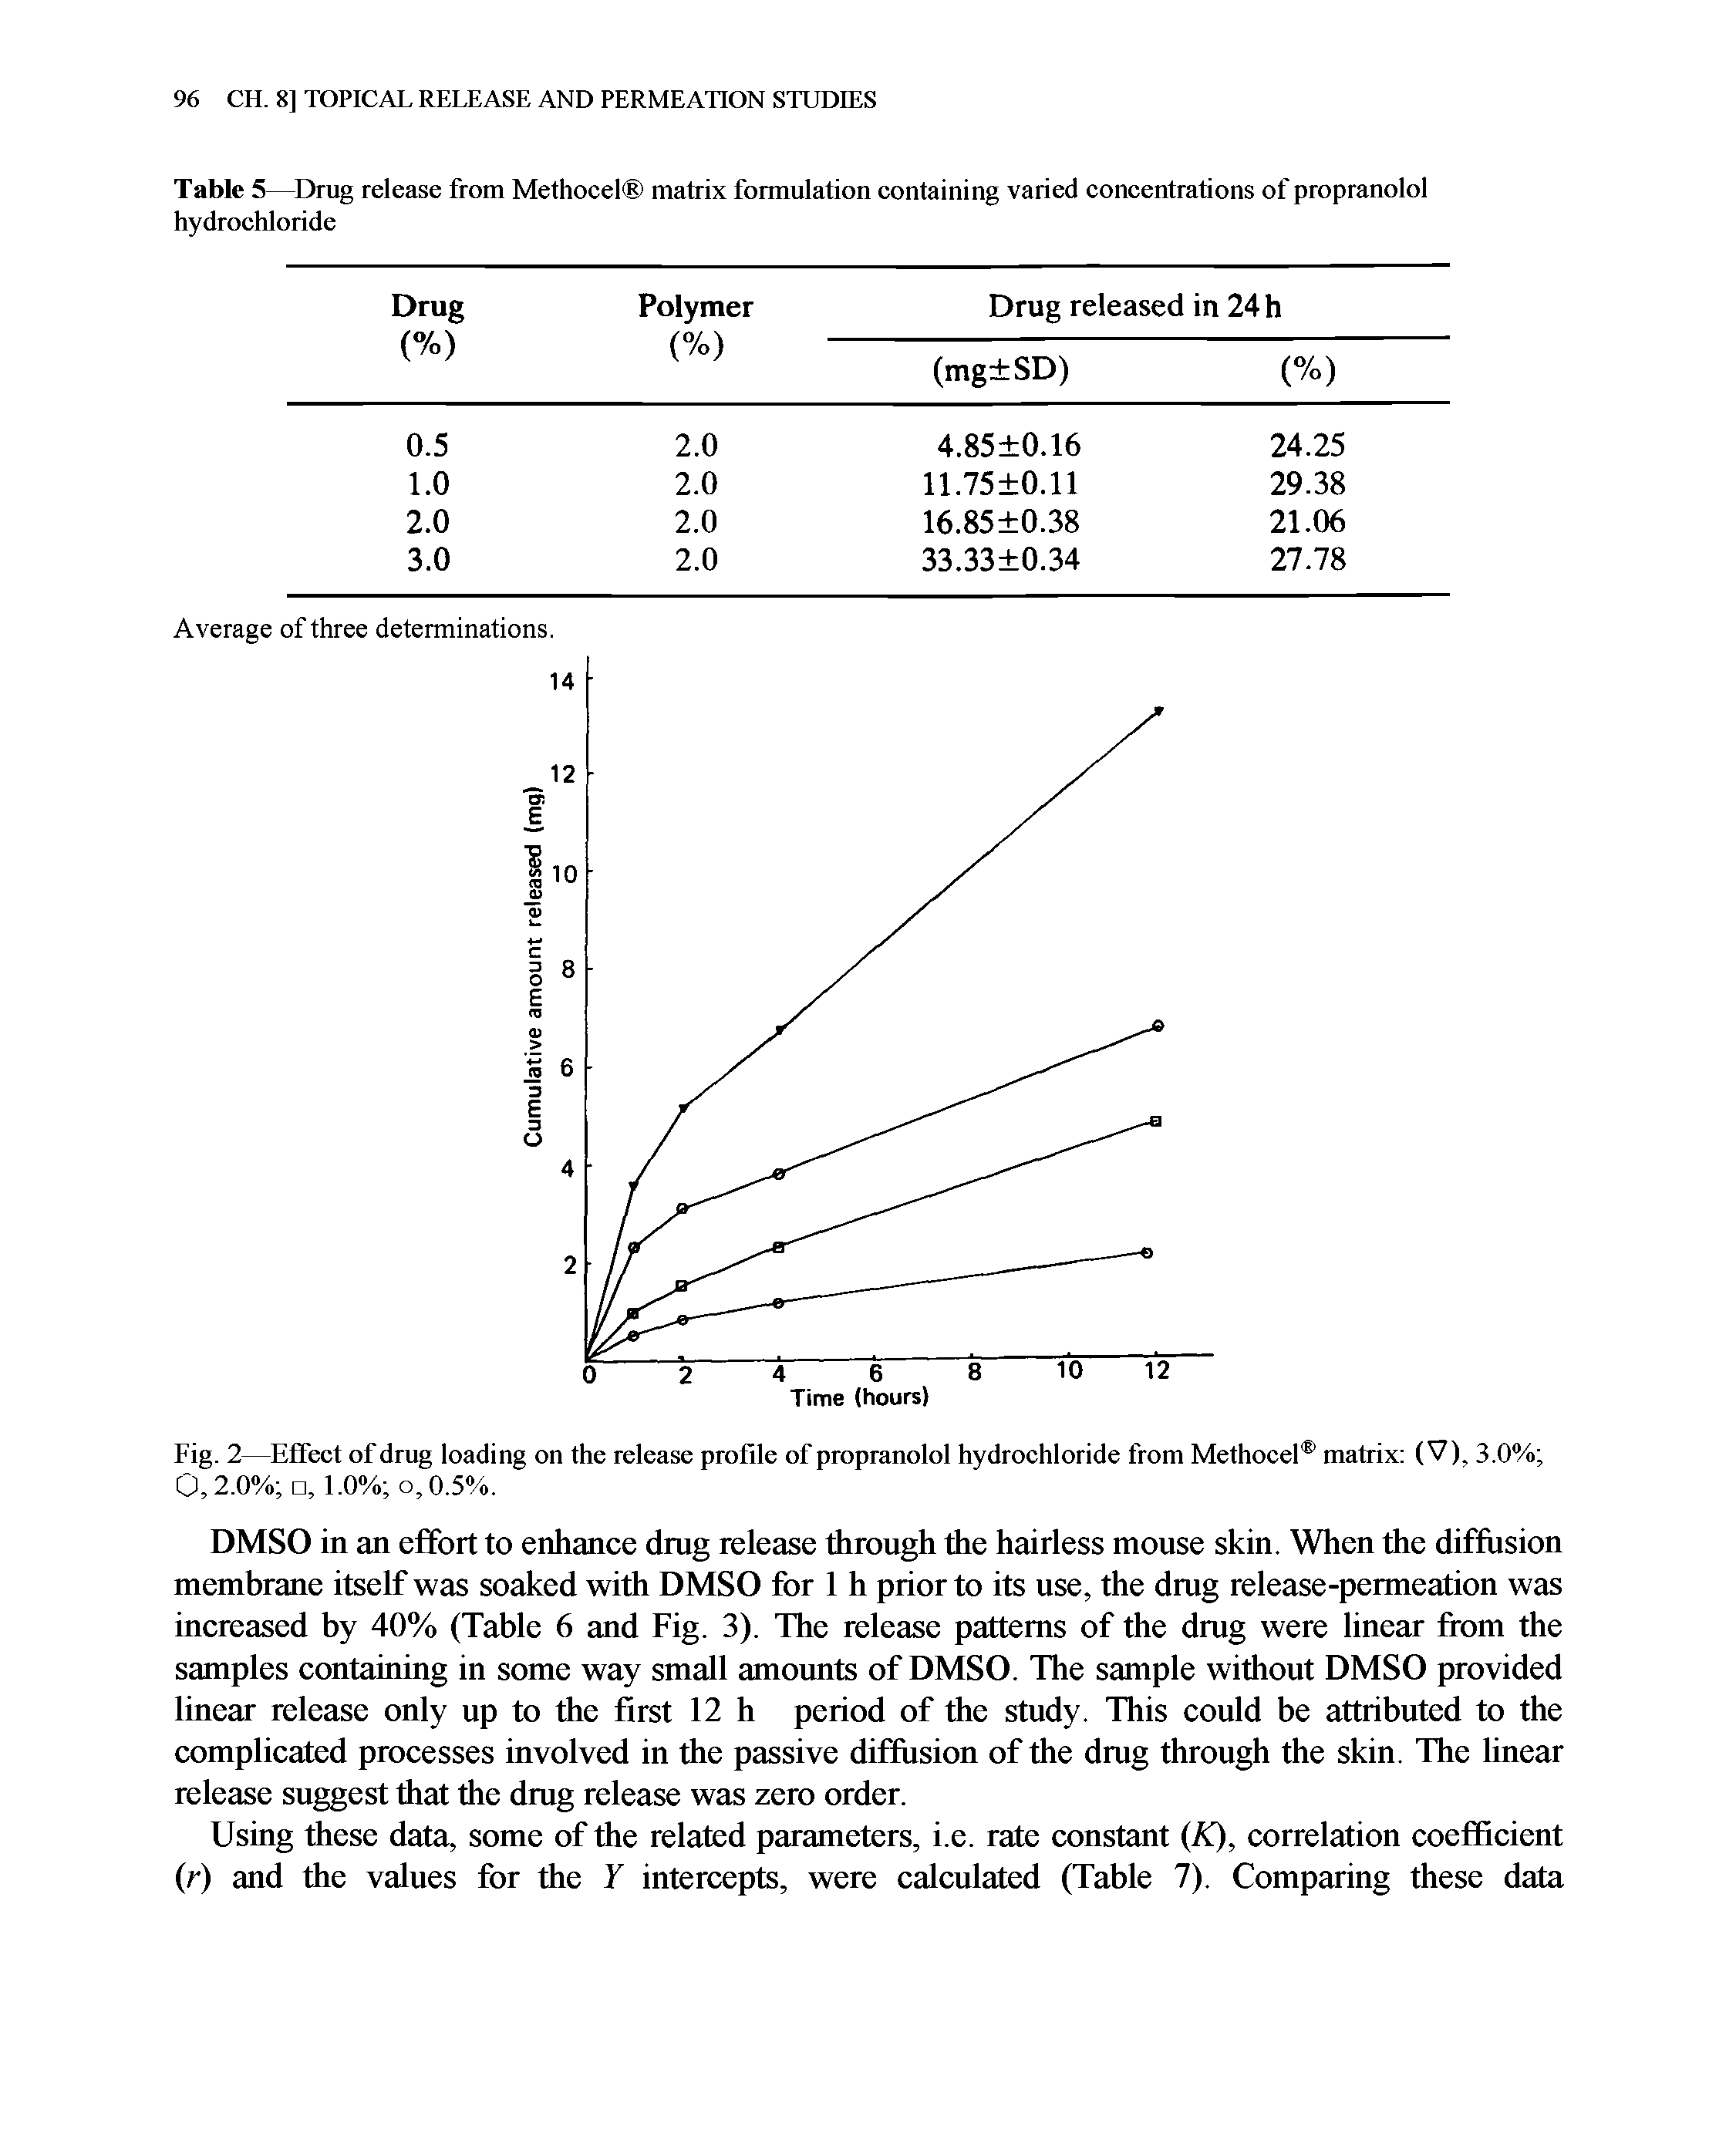 Fig. 2—Effect of drug loading on the release profile of propranolol hydrochloride from Methocel matrix (V), 3.0% 0,2.0% , 1.0% o,0.5%.